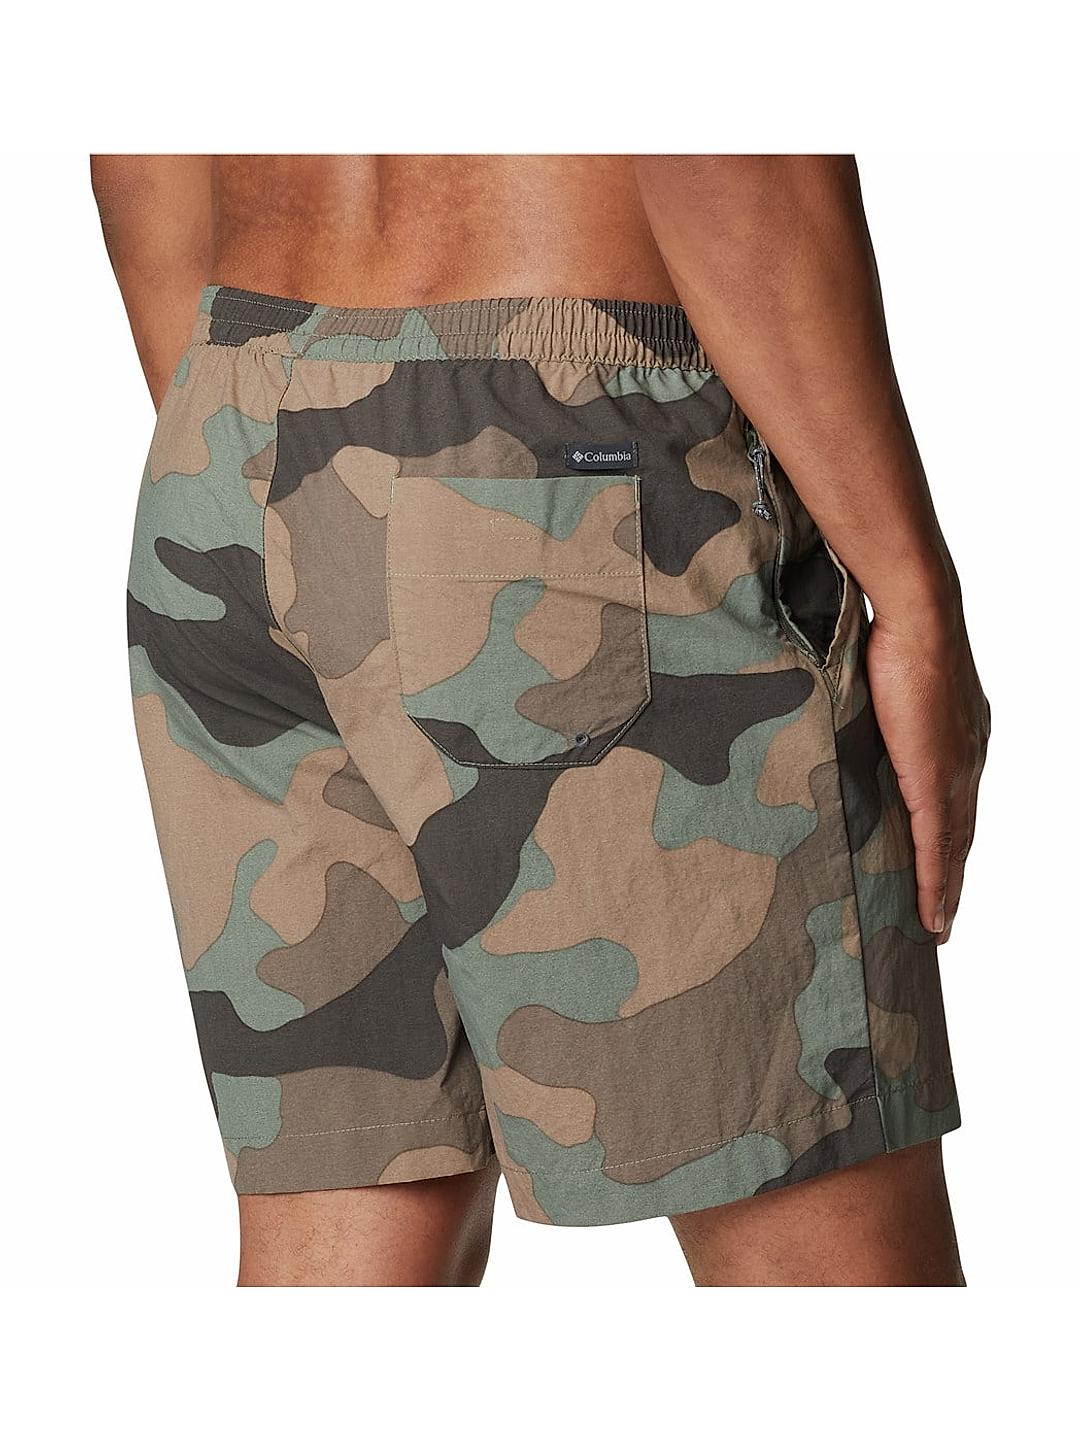 Buy Green M Summerdry Short for Men Online at Columbia Sportswear | 480817